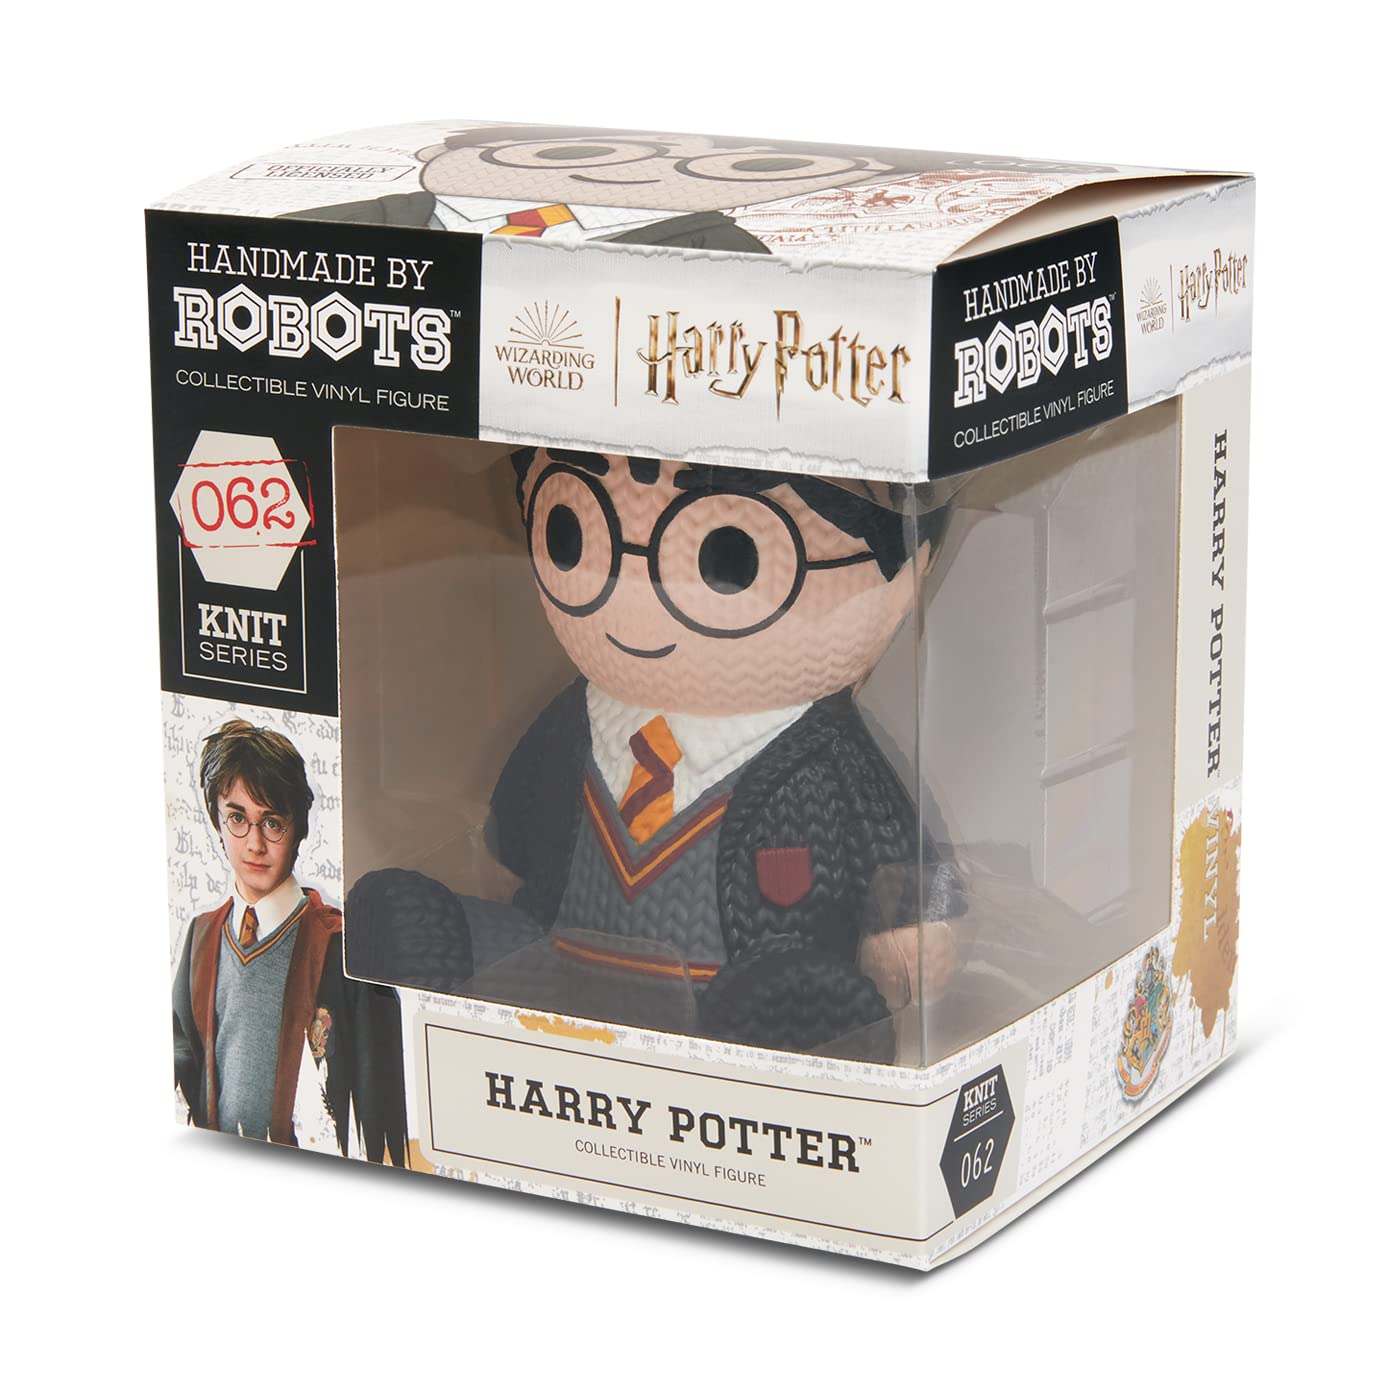 Harry Potter Handmade by Robots Full Size Vinyl Figure